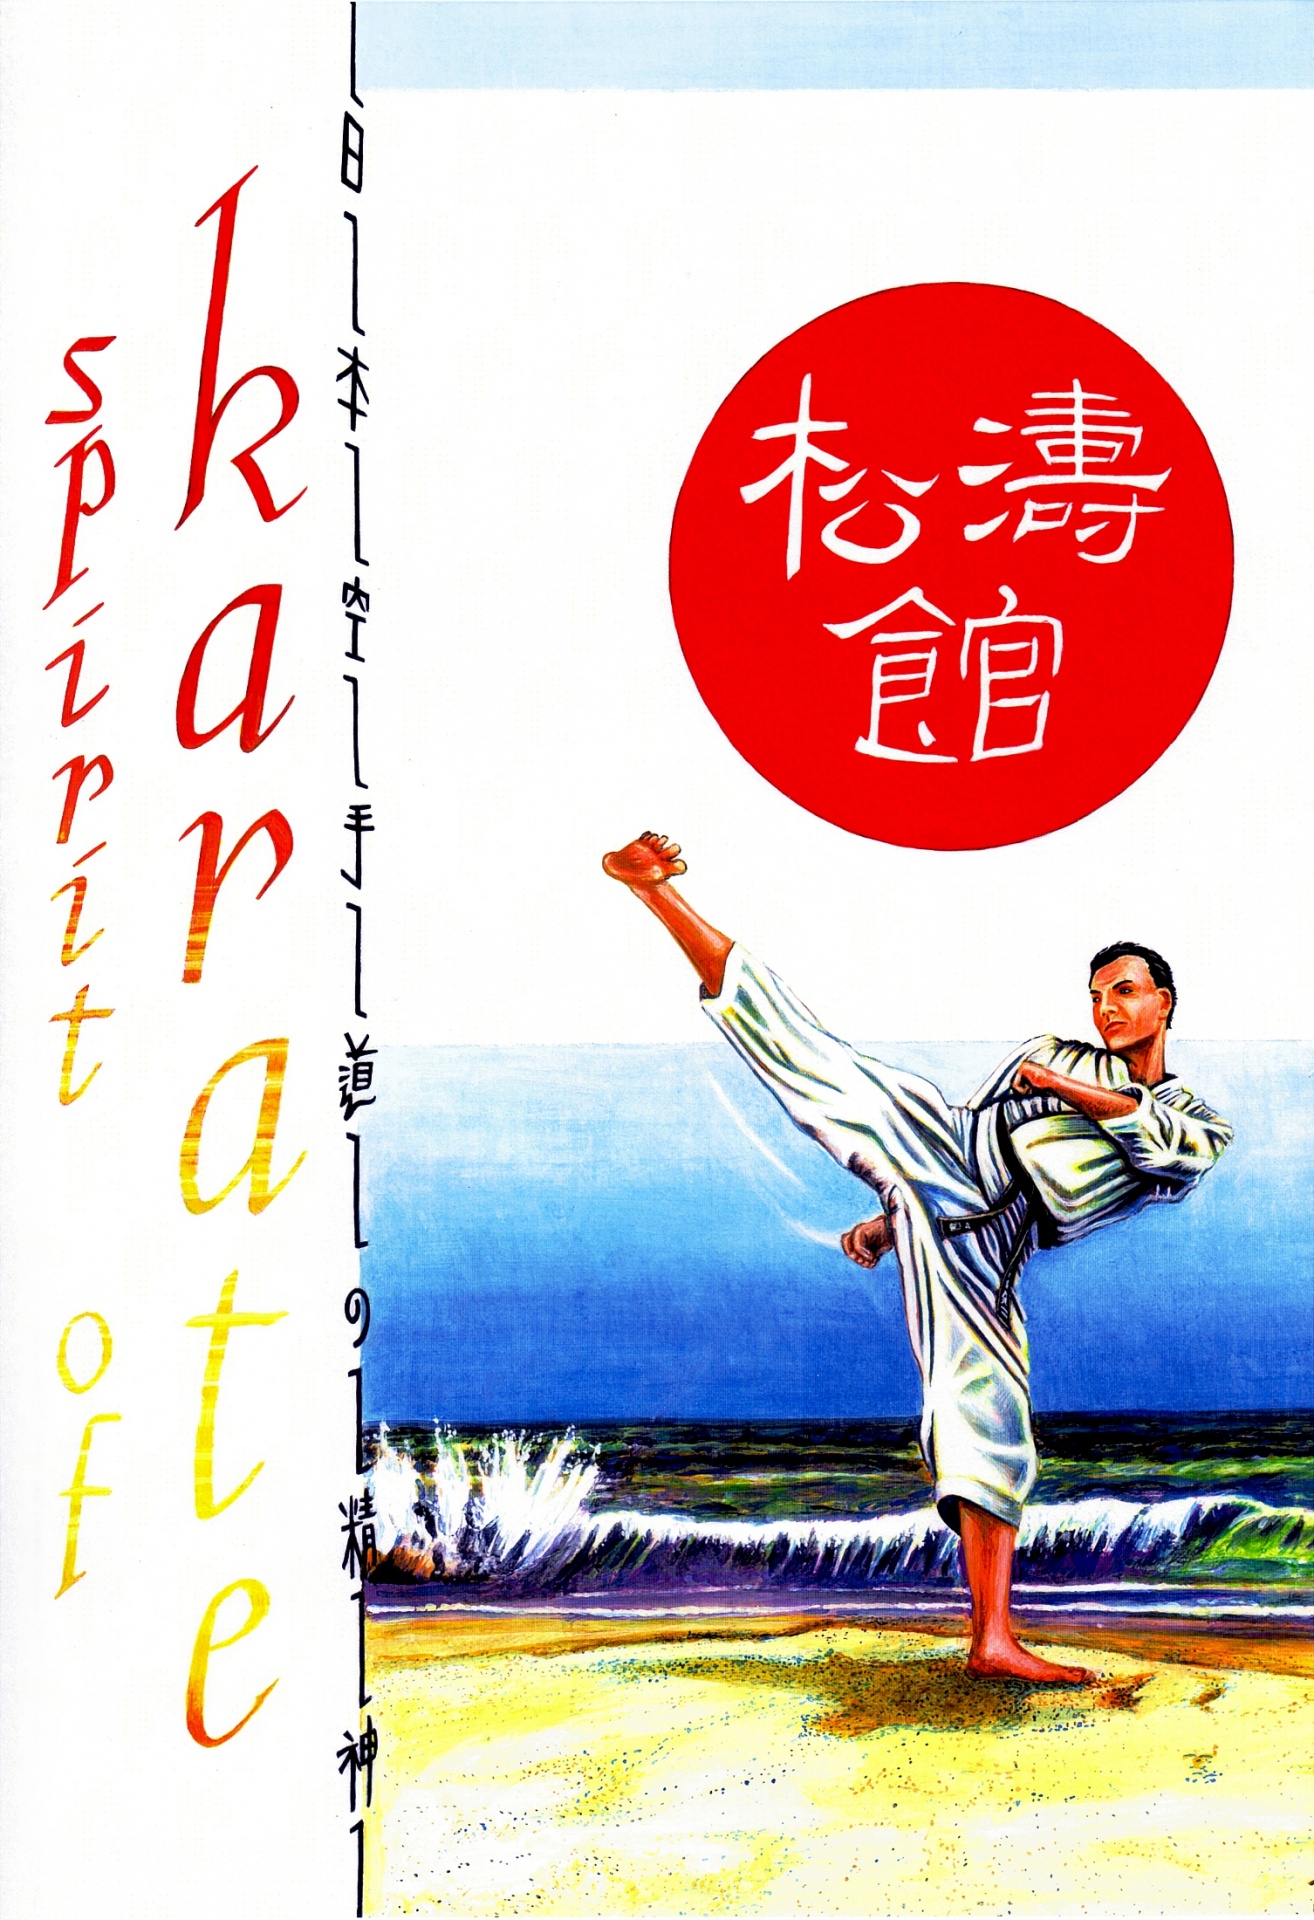 gauche painting shotokan karate martial arts free photo